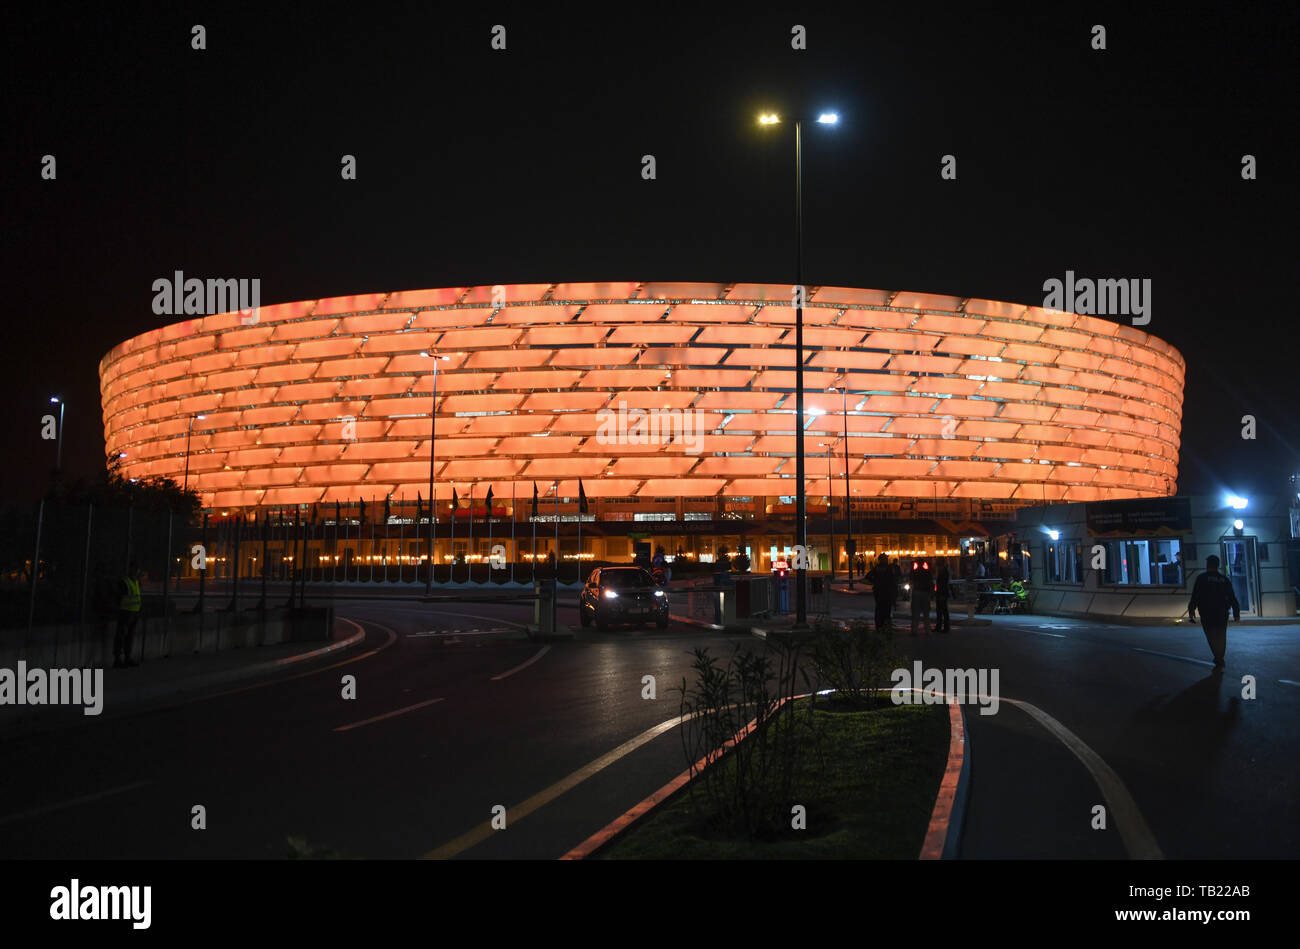 Baku stadium notte immagini e fotografie stock ad alta risoluzione - Alamy